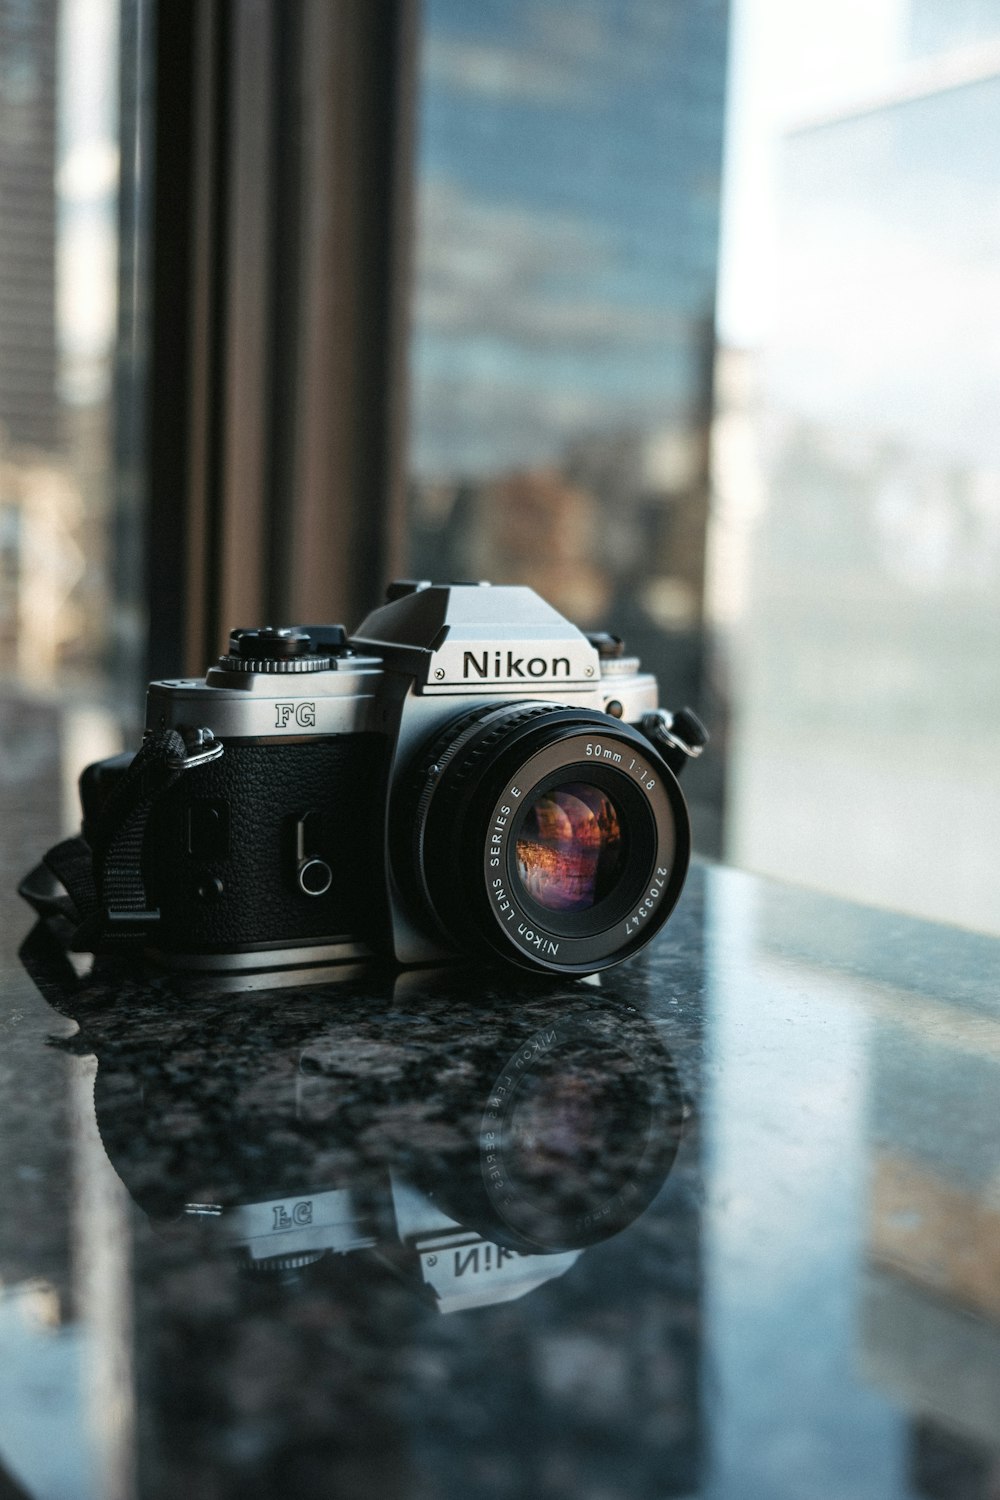 shallow focus photo of black and gray Nikon SLR camera